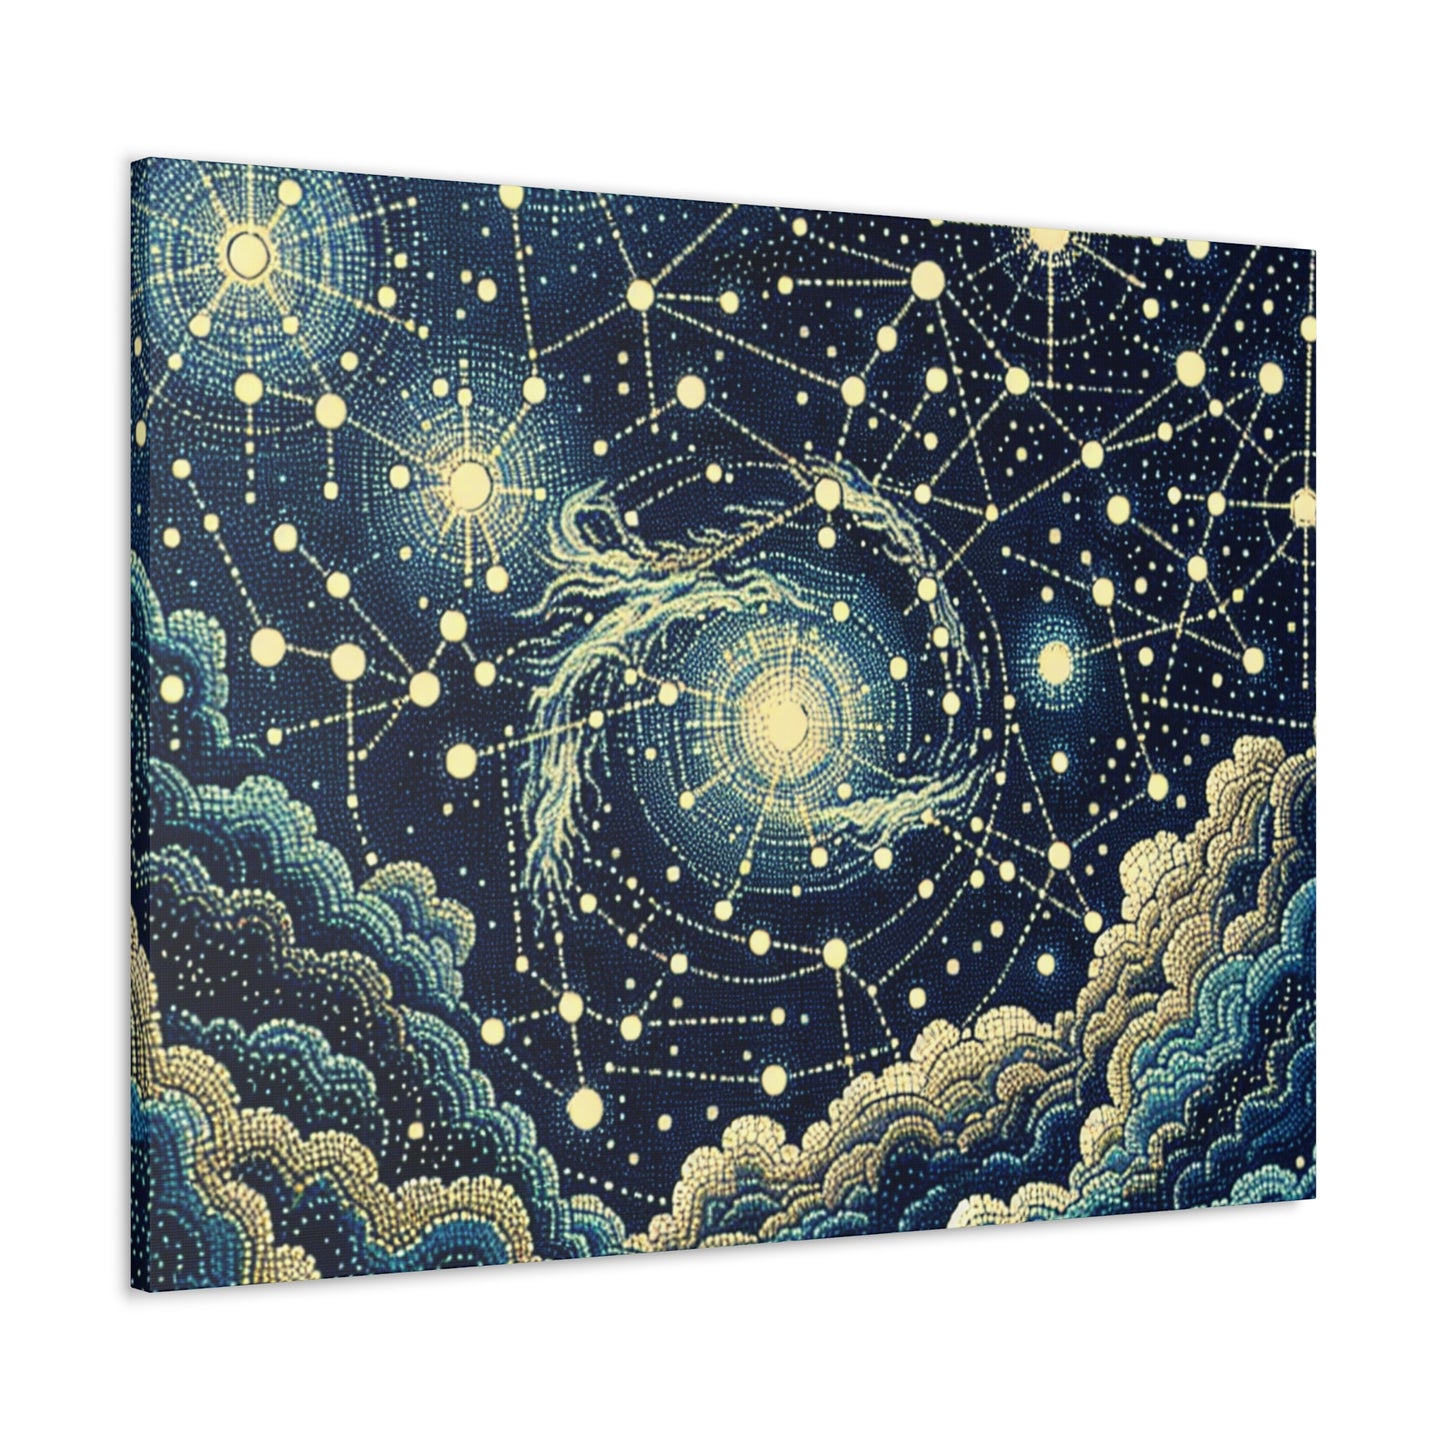 "Dotting the Heavens" - The Alien Canva Pointillism Style